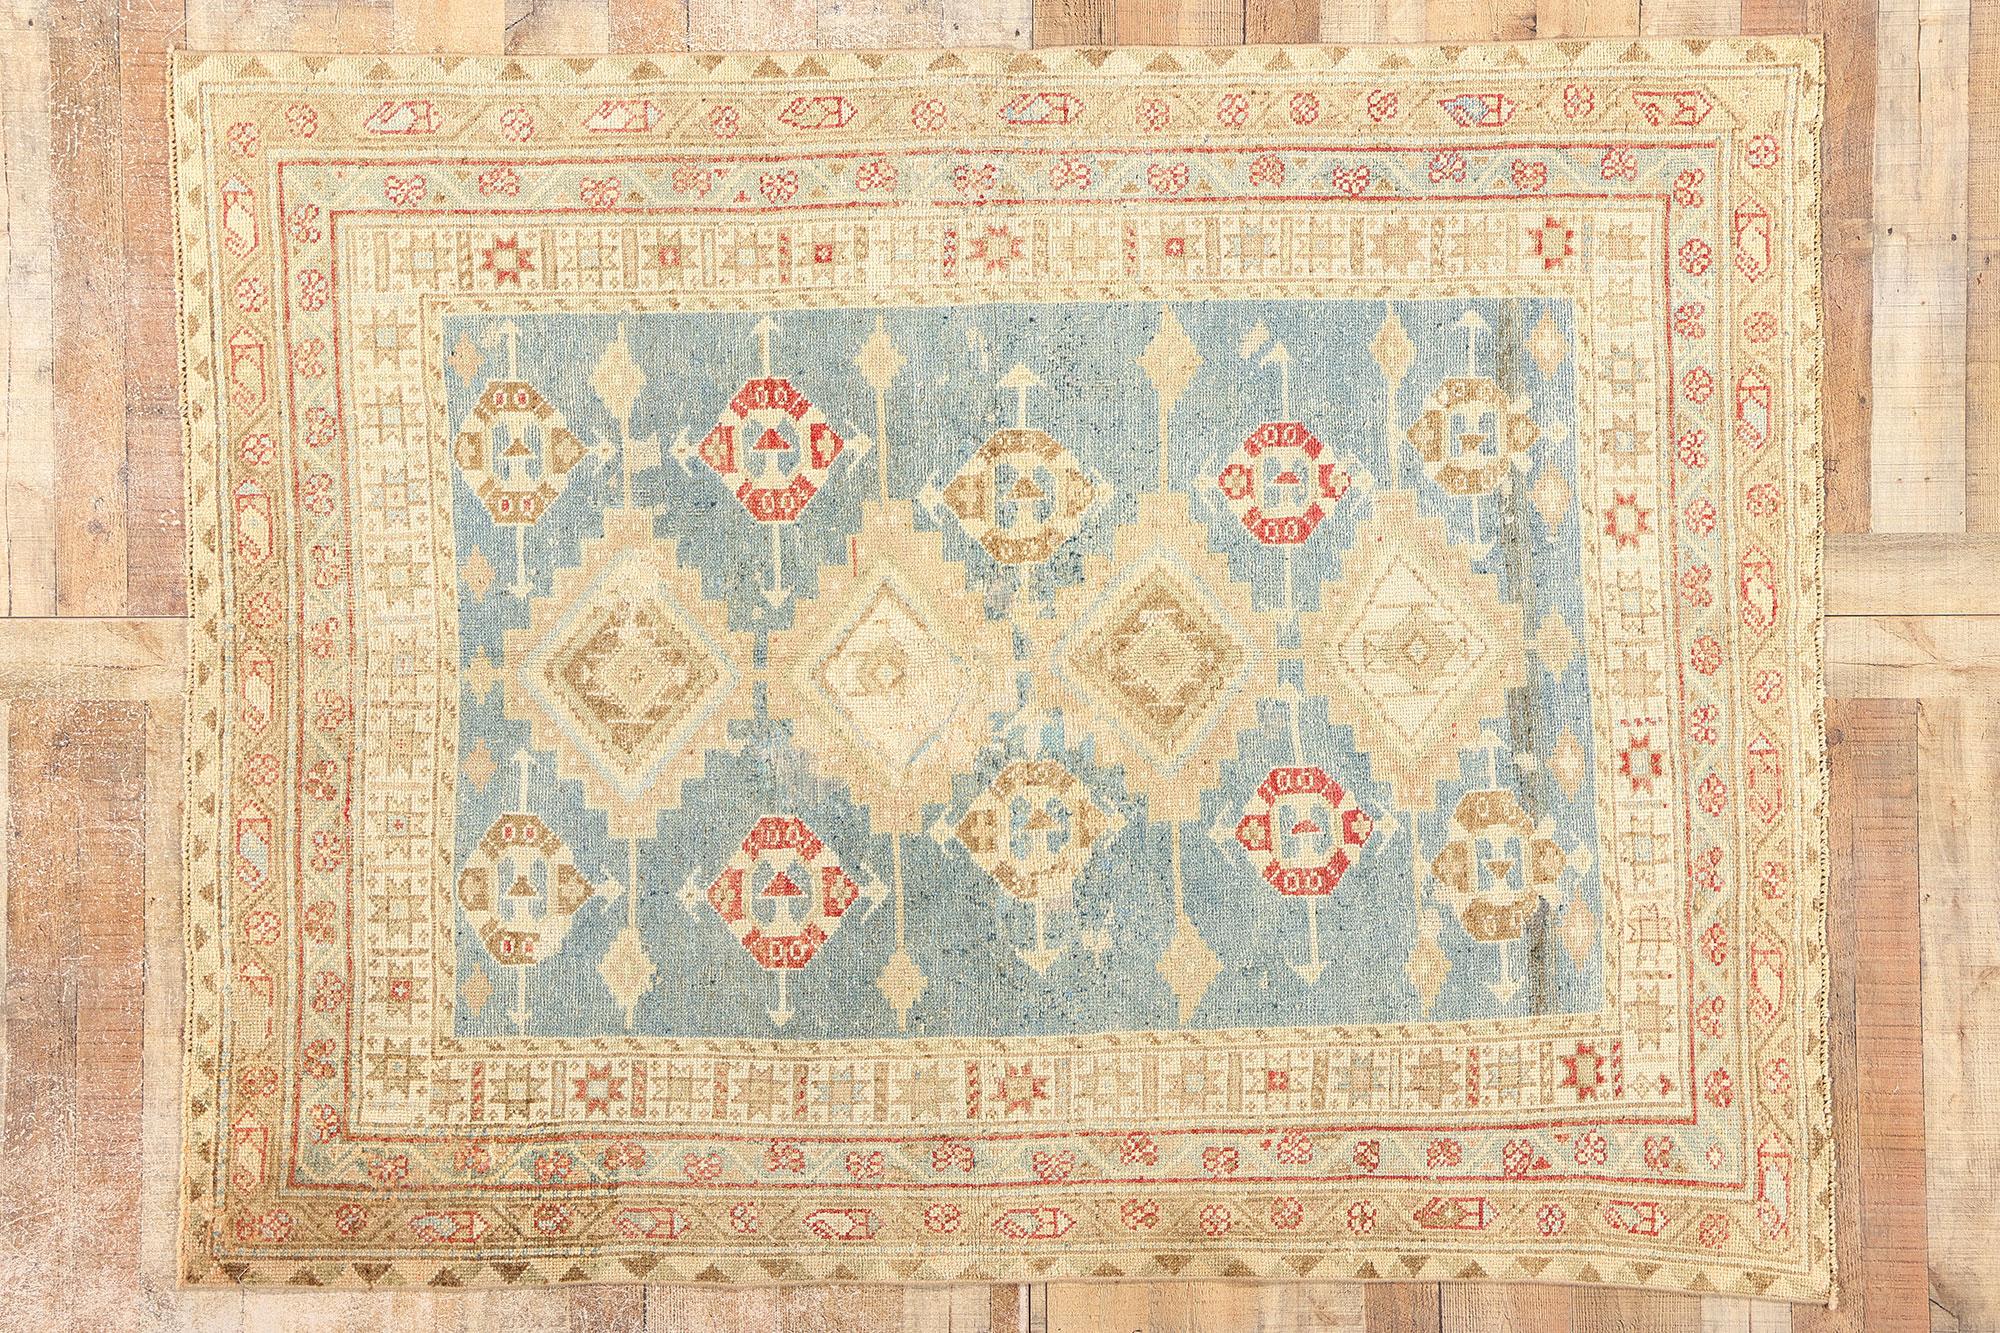 1920's Antique Blue Persian Shiraz Rug, 05'02 x 06'09 For Sale 2